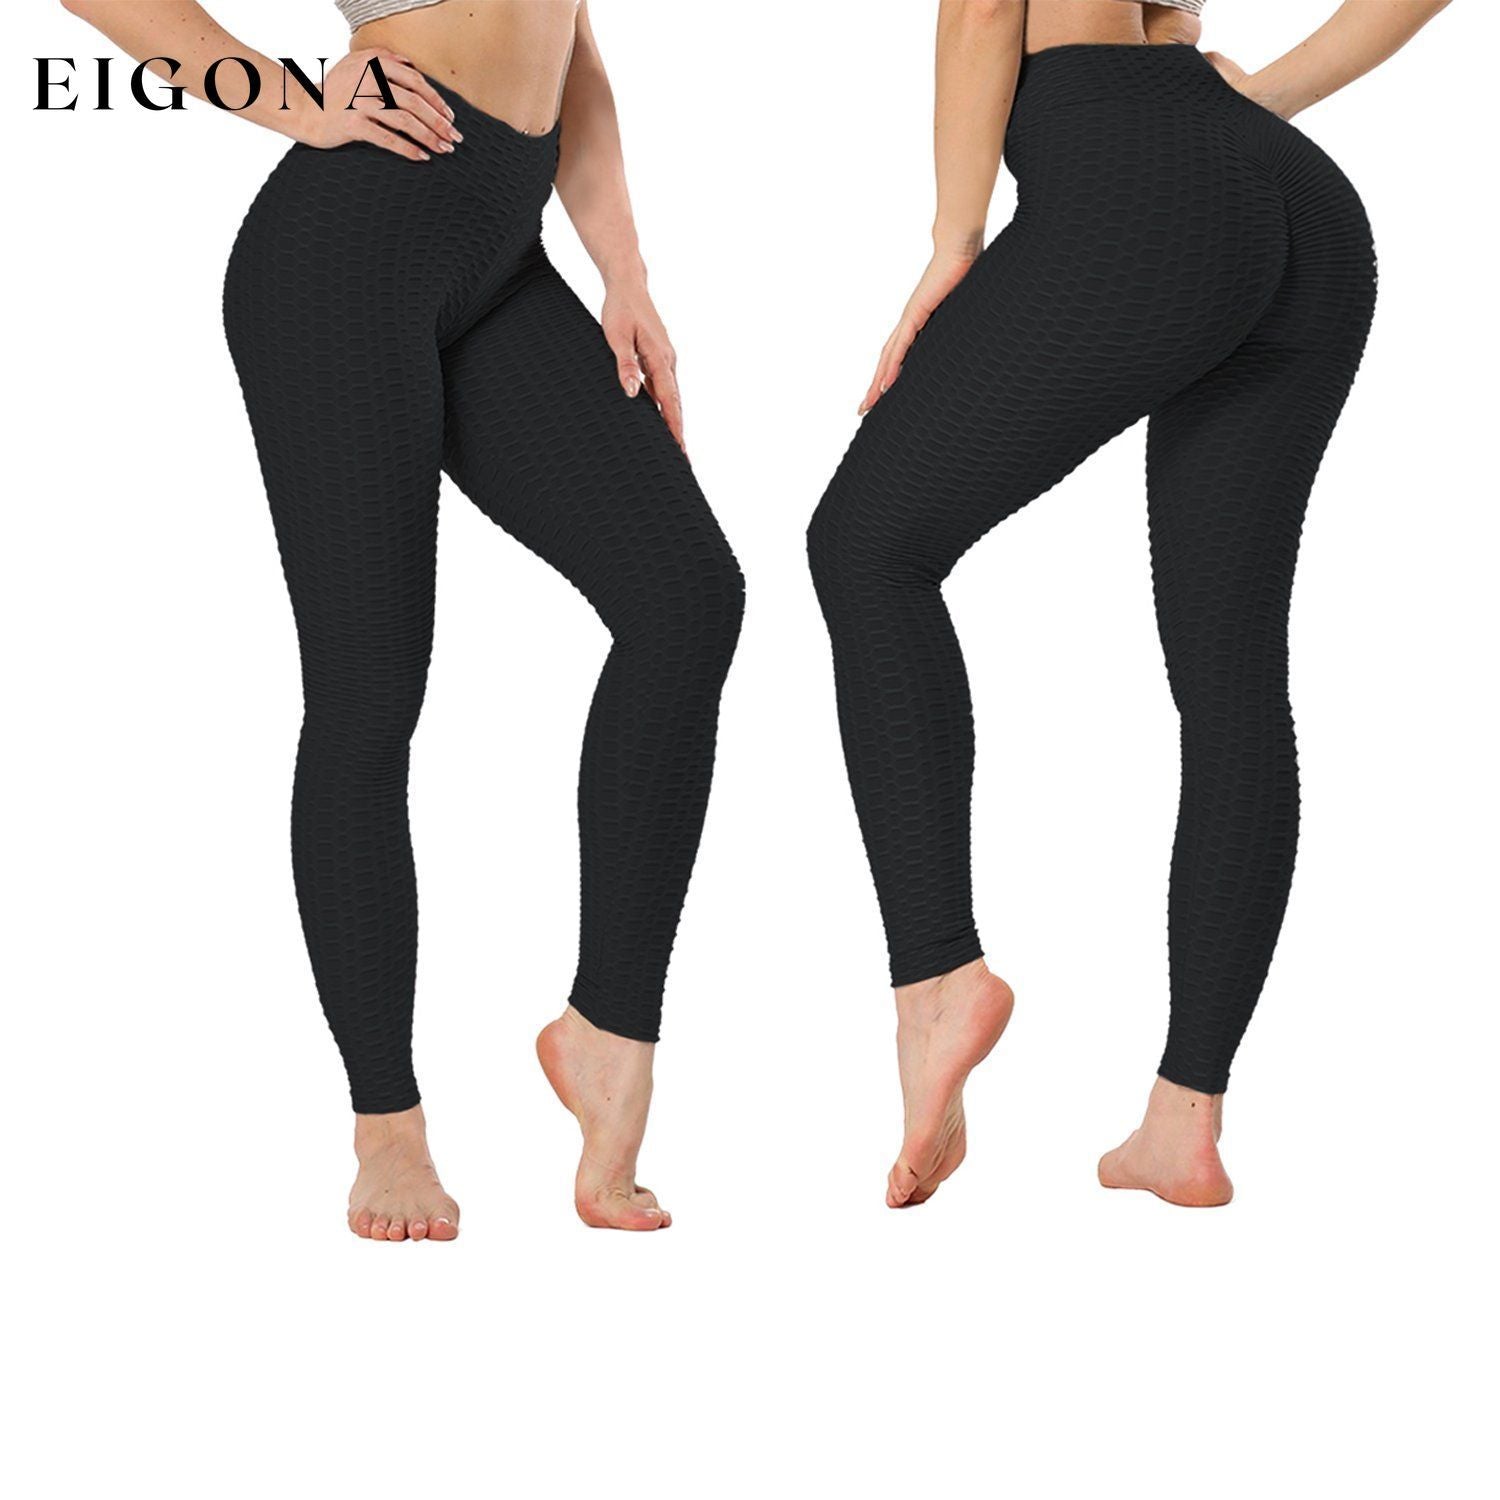 Women's High Waist Textured Butt Lifting Slimming Workout Leggings Tights Pants Black __stock:100 bottoms refund_fee:800